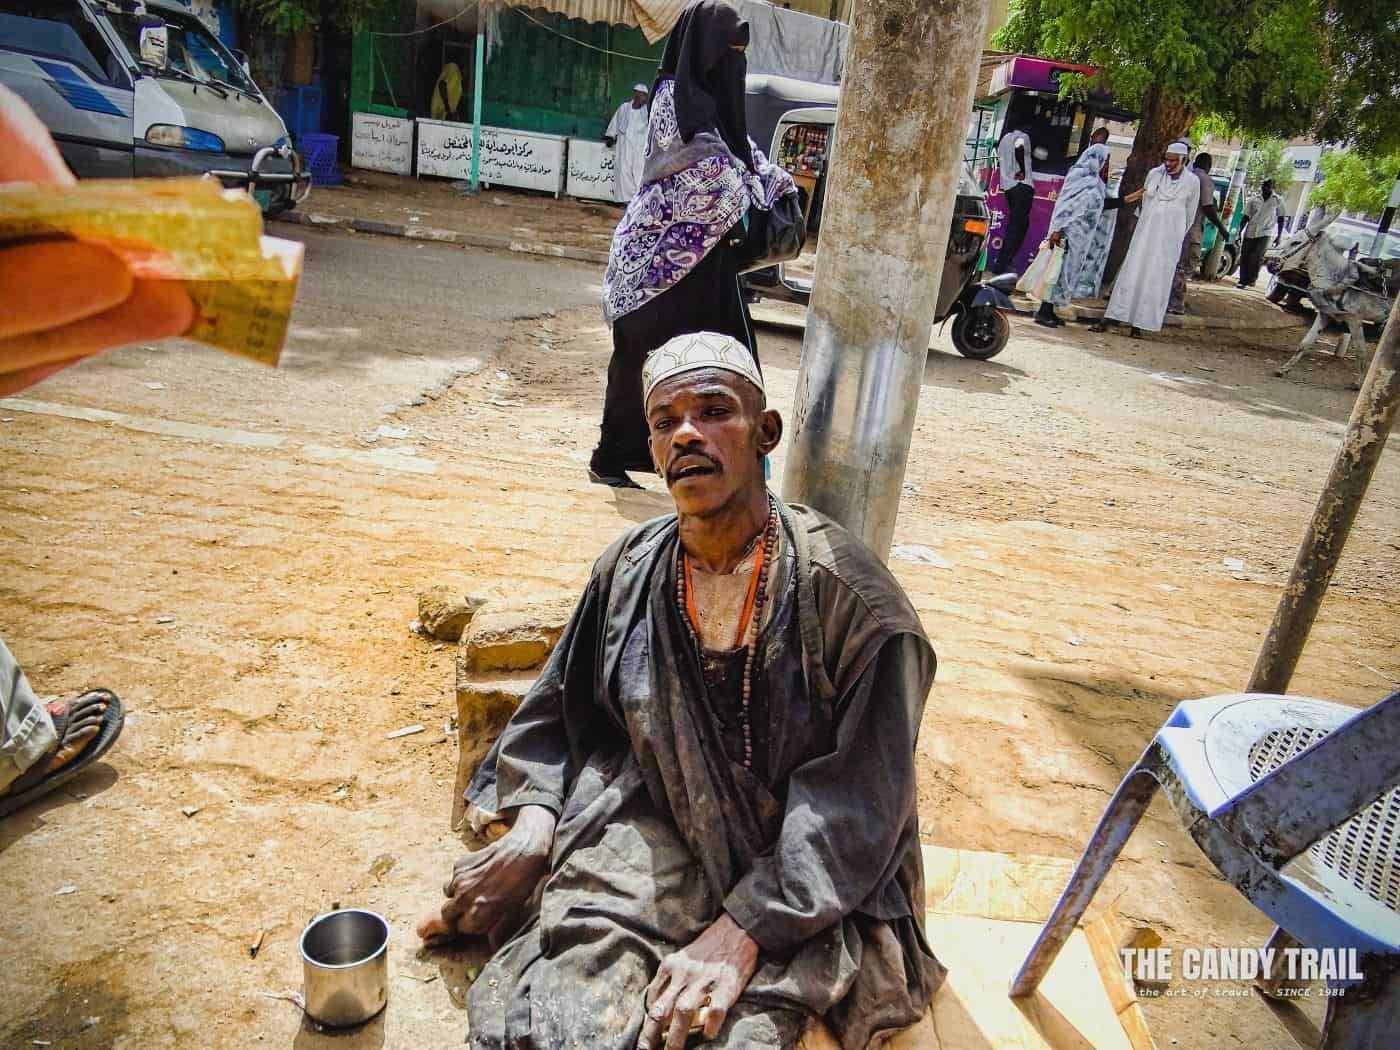 beggar-street-scene-sudan